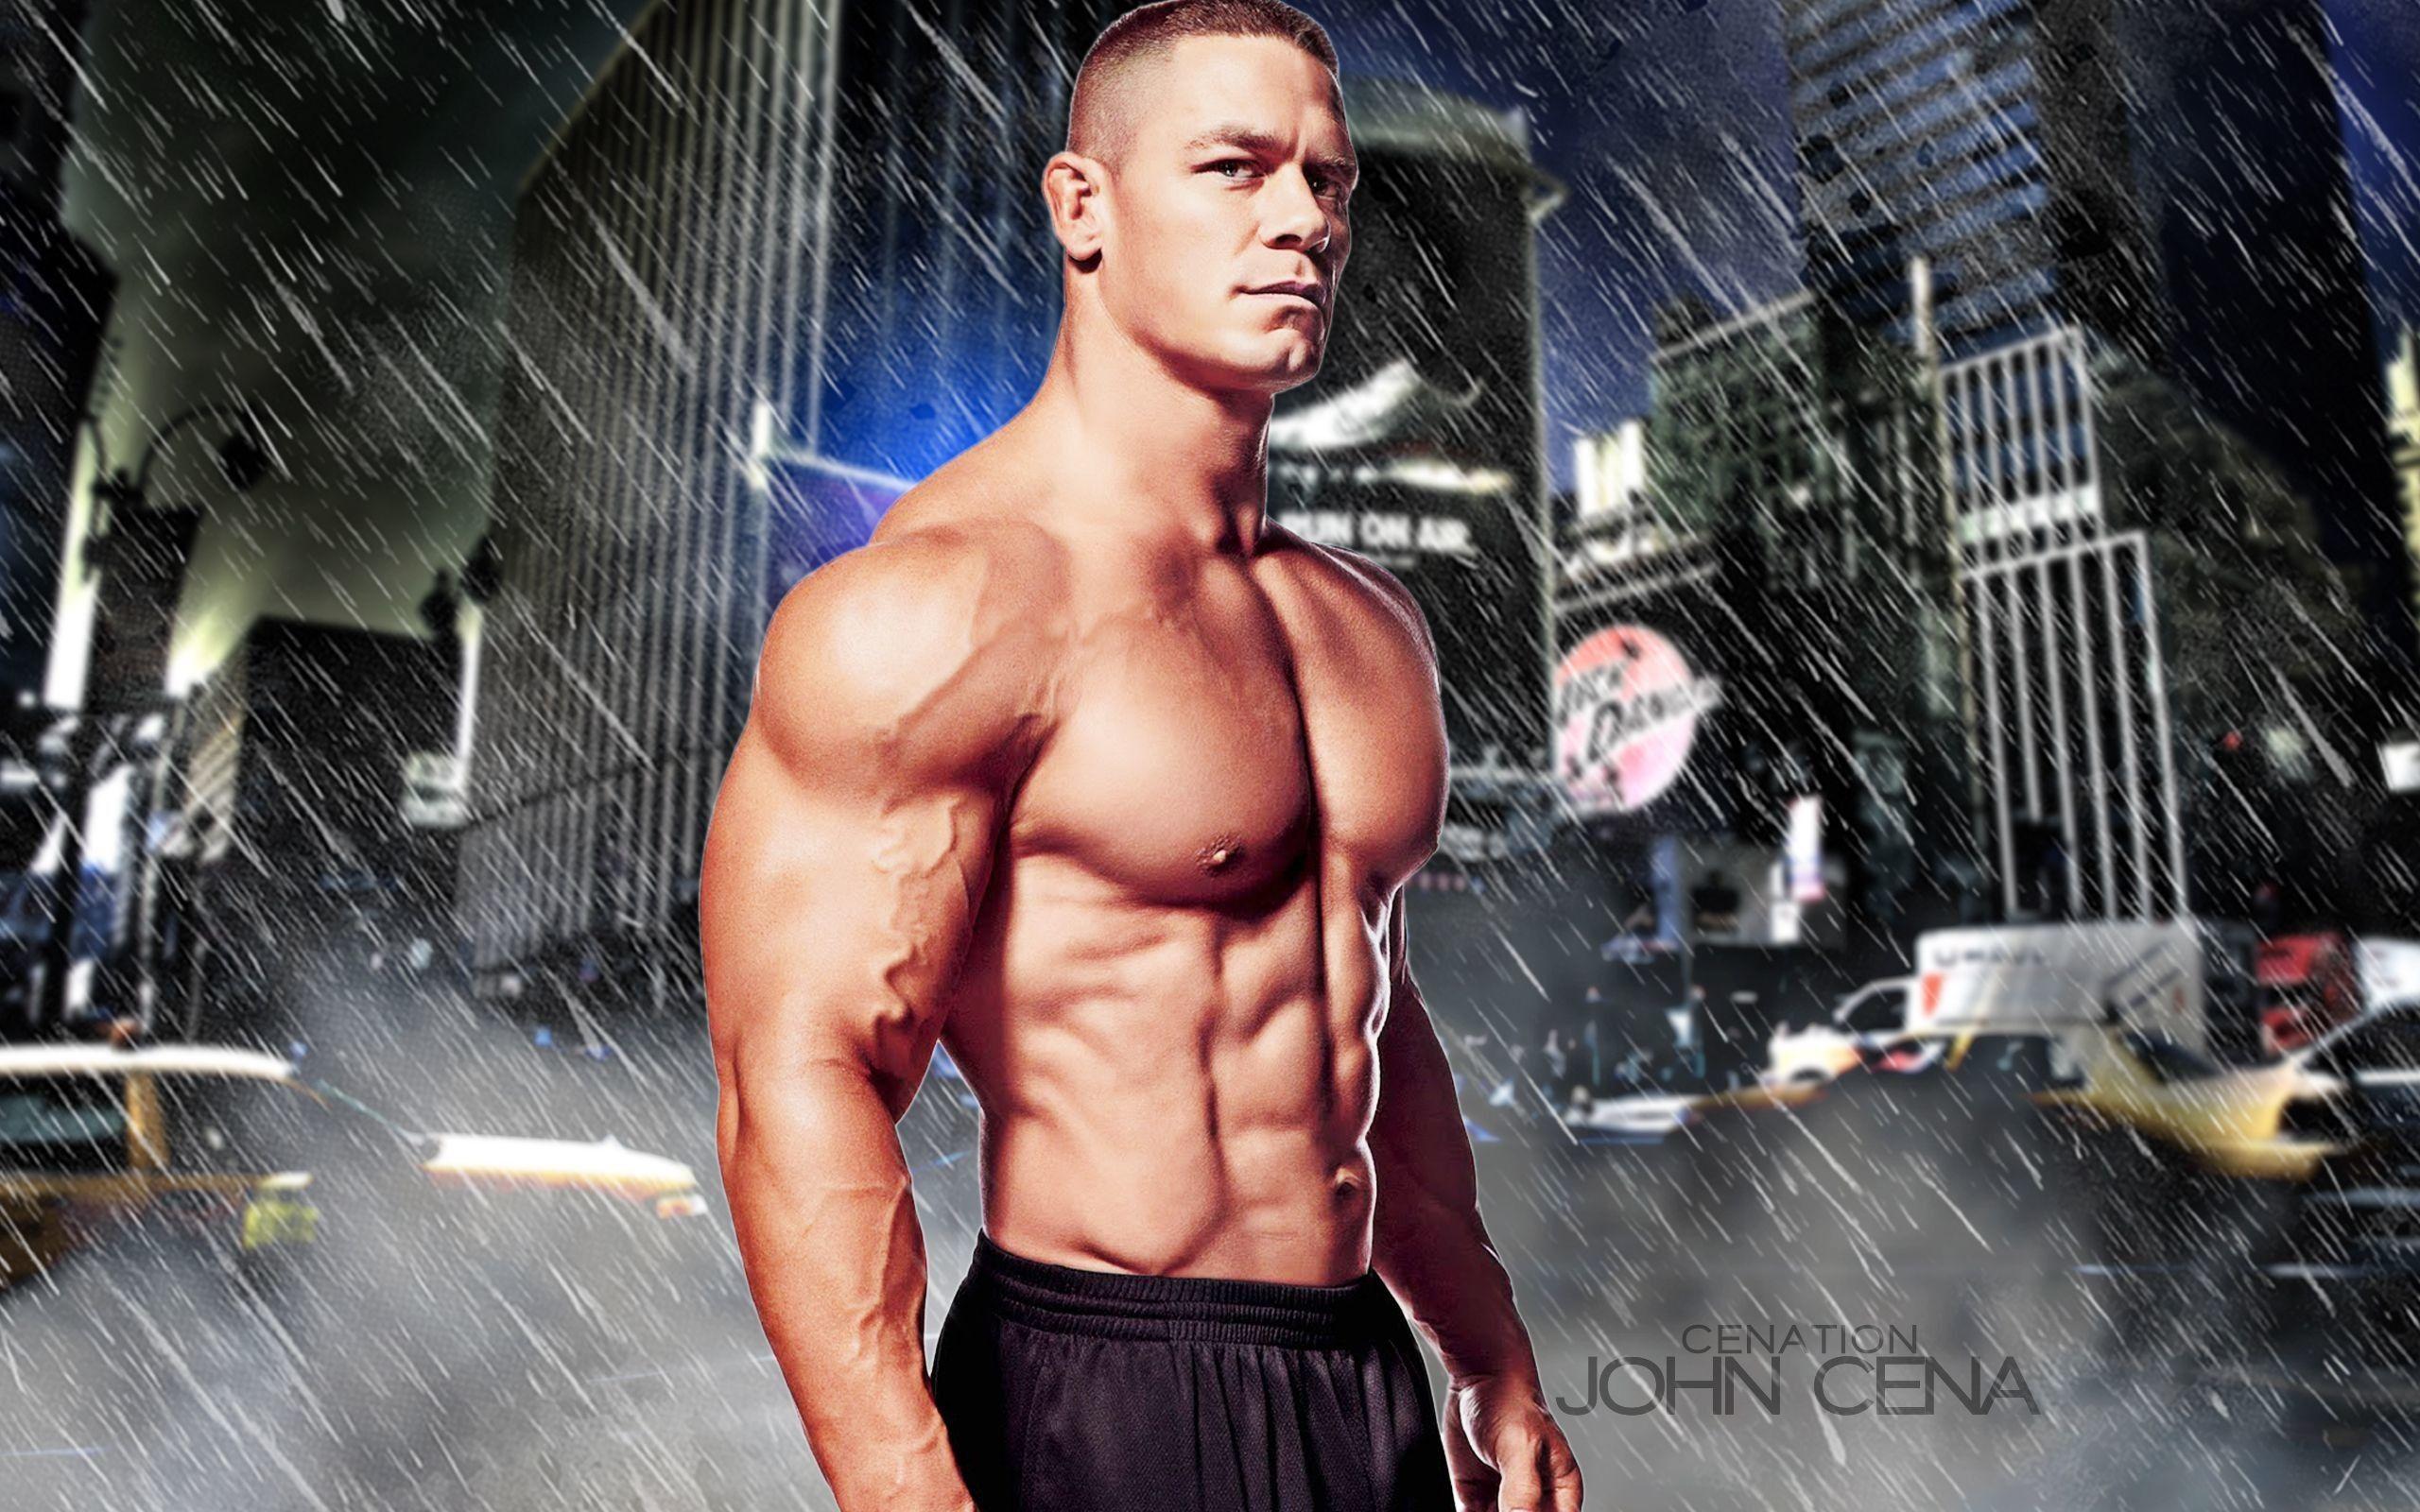 Wwe Superstar John Cena Wallpaper background picture